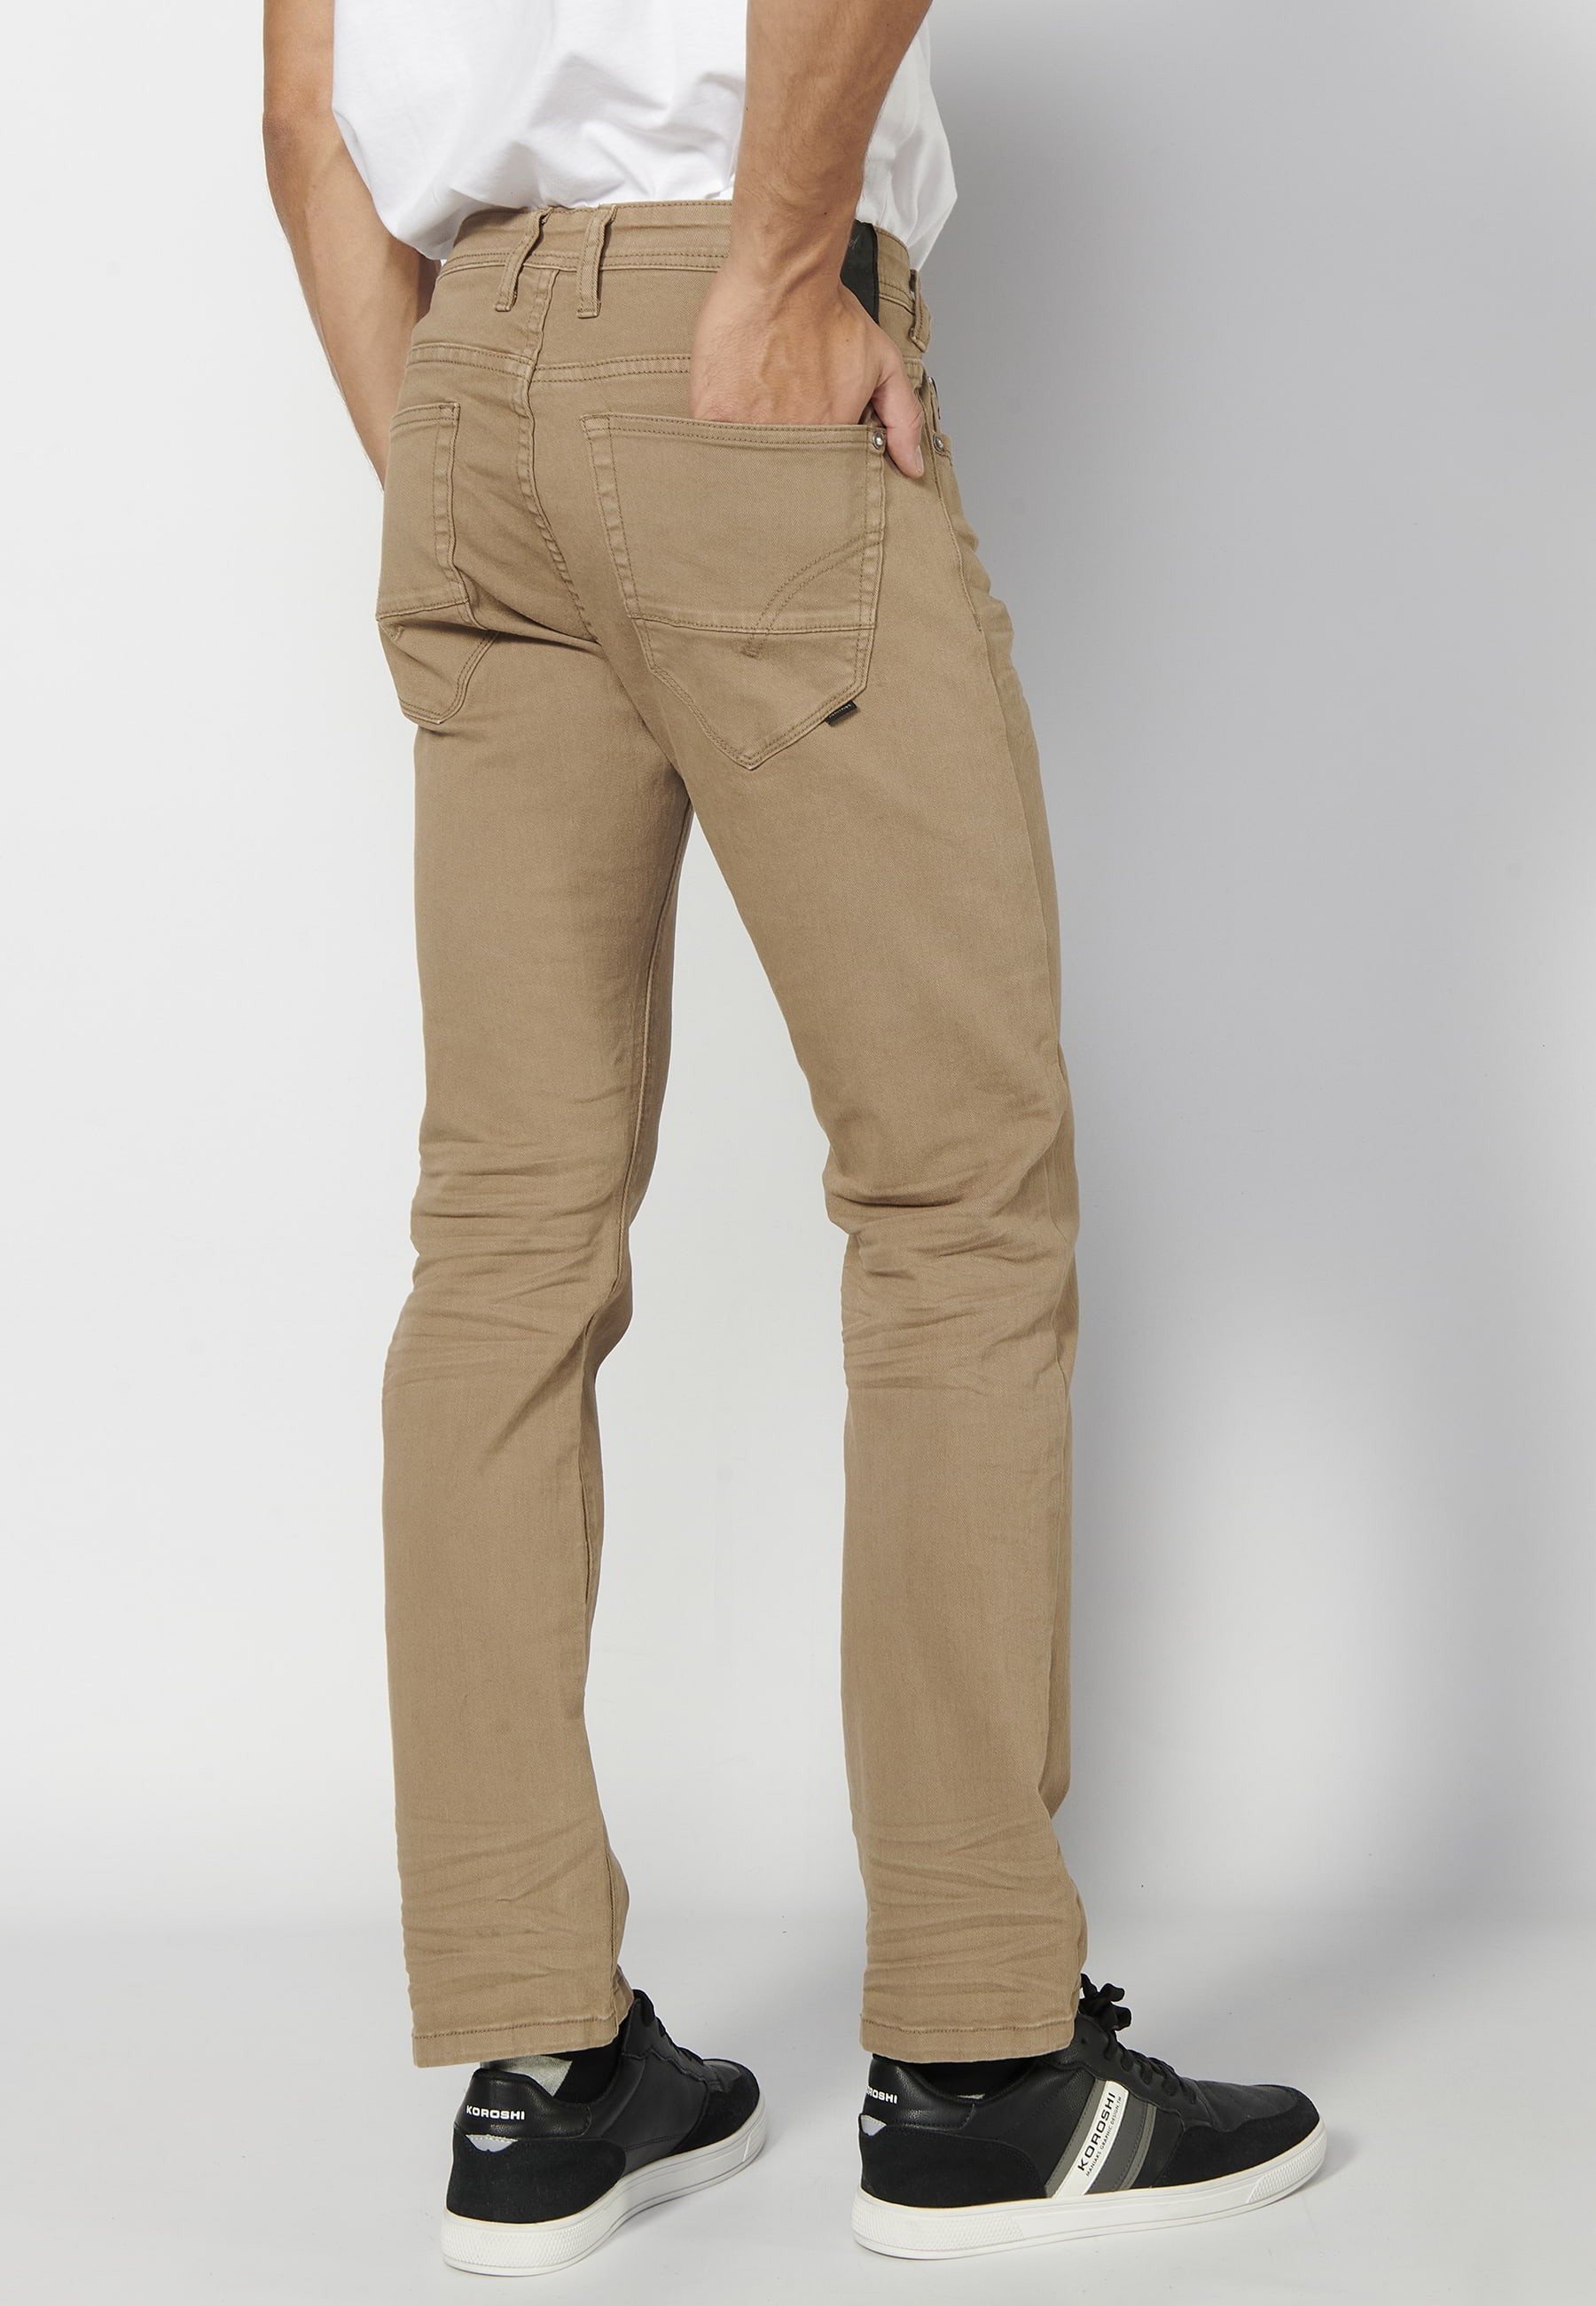 Regular fit stretch long pants, with five pockets, Beige color, for Men 5